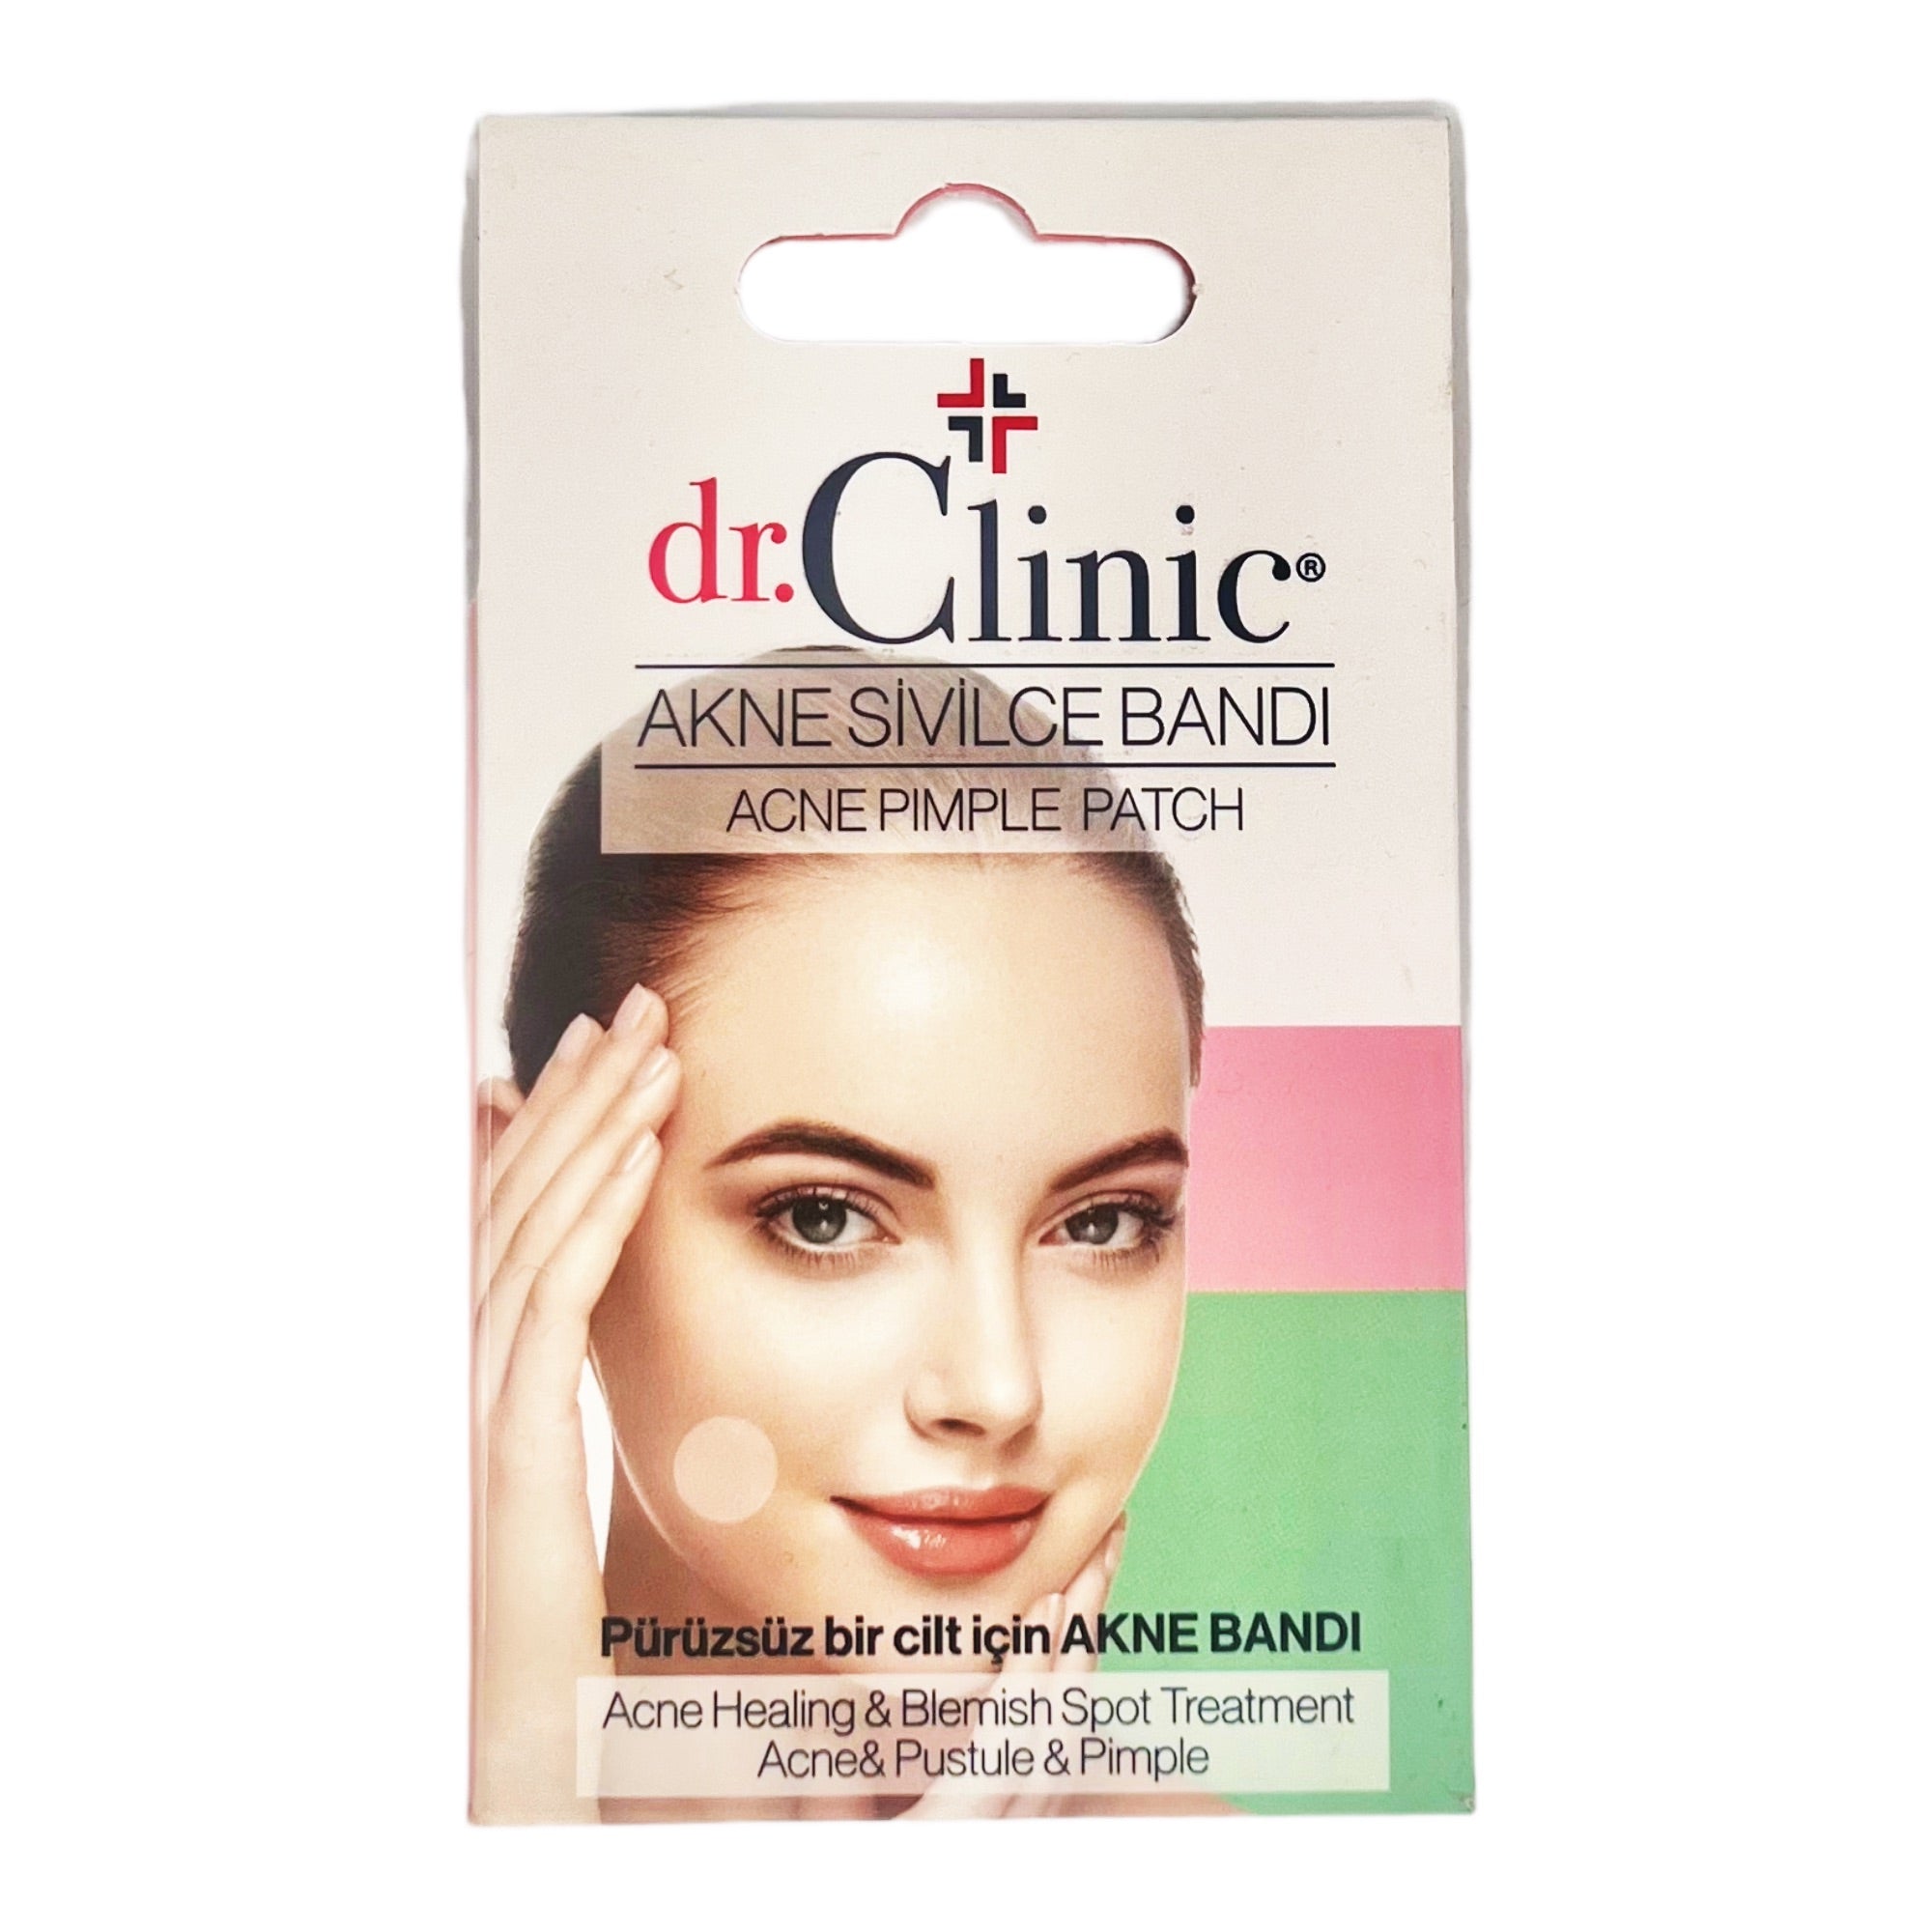 Dr.Clinic - Acne Pimple Patch - Eson Direct